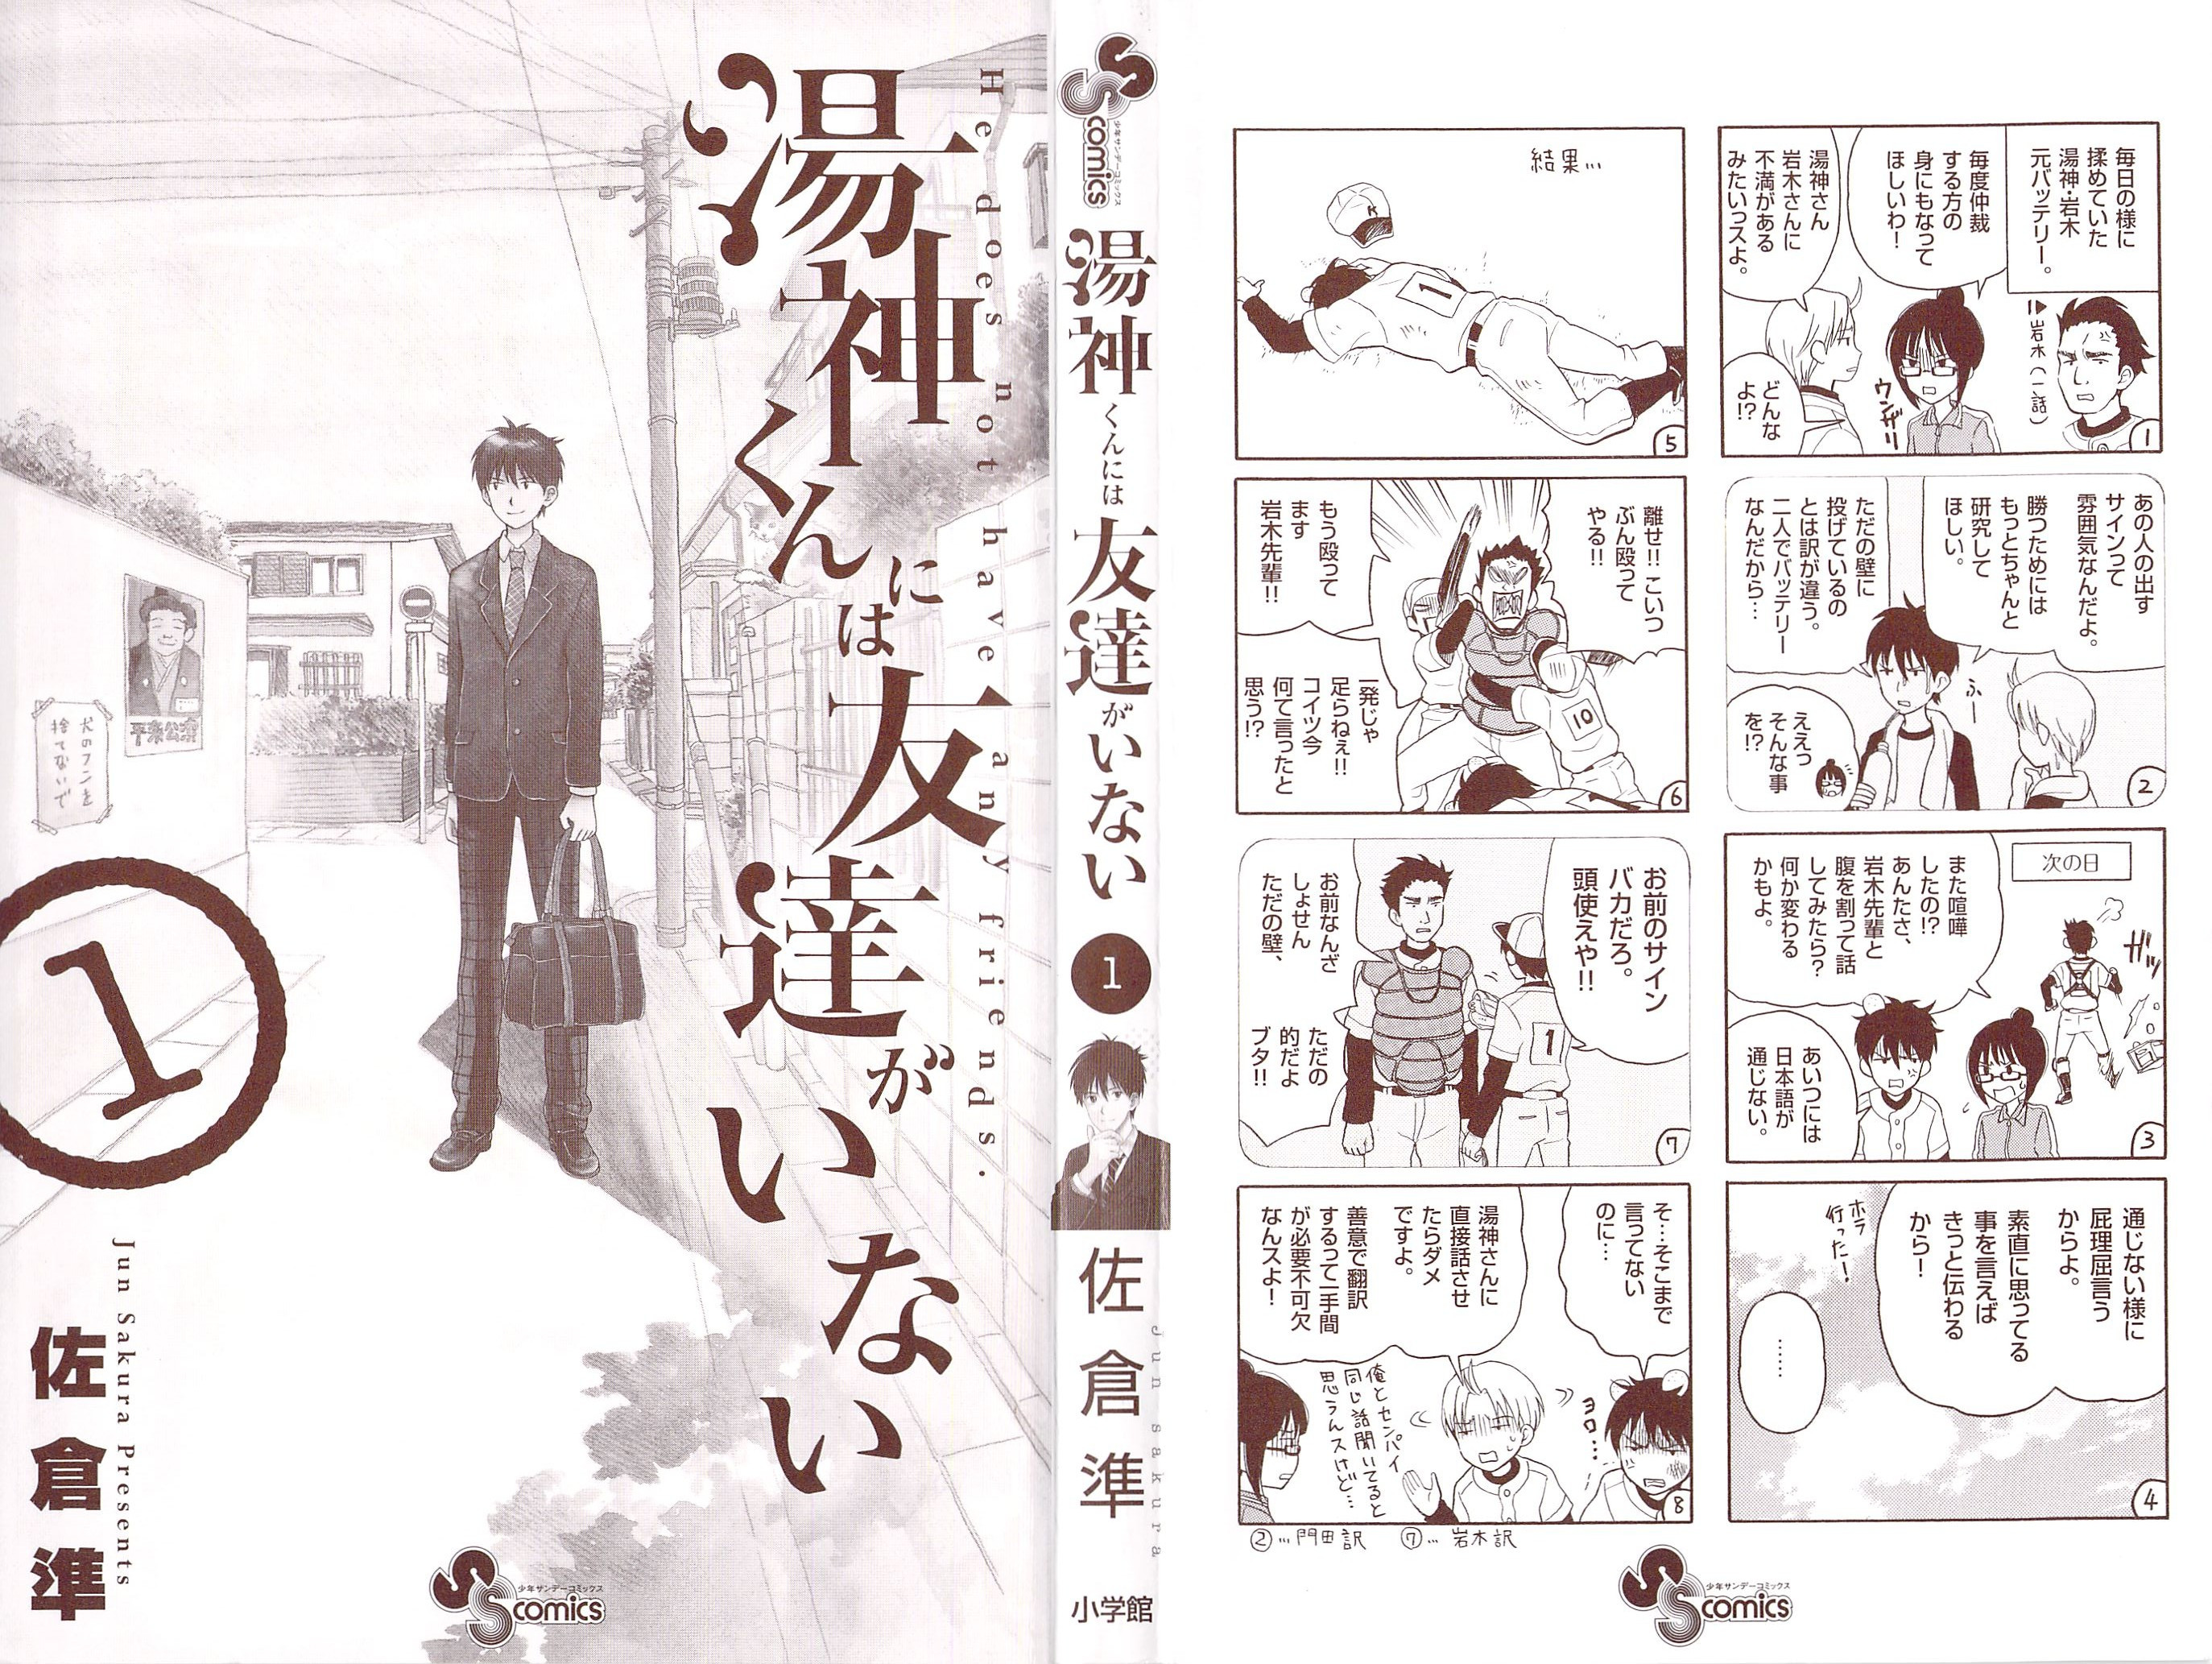 Yugami-kun ni wa Tomodachi ga Inai - Chapter 001 - Page 2